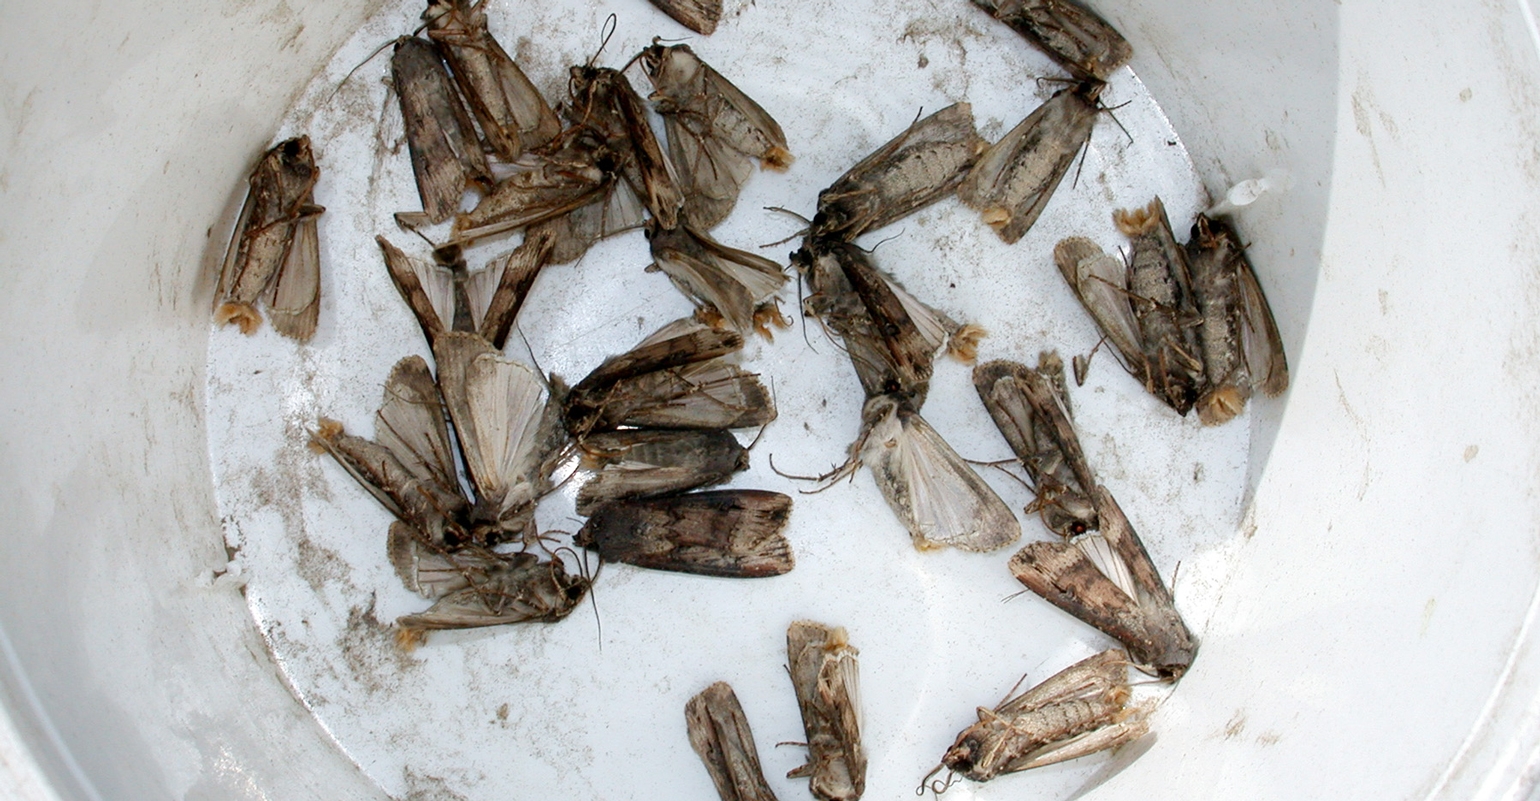 2 Moth Traps - Able Catch Pantry Pest Trap